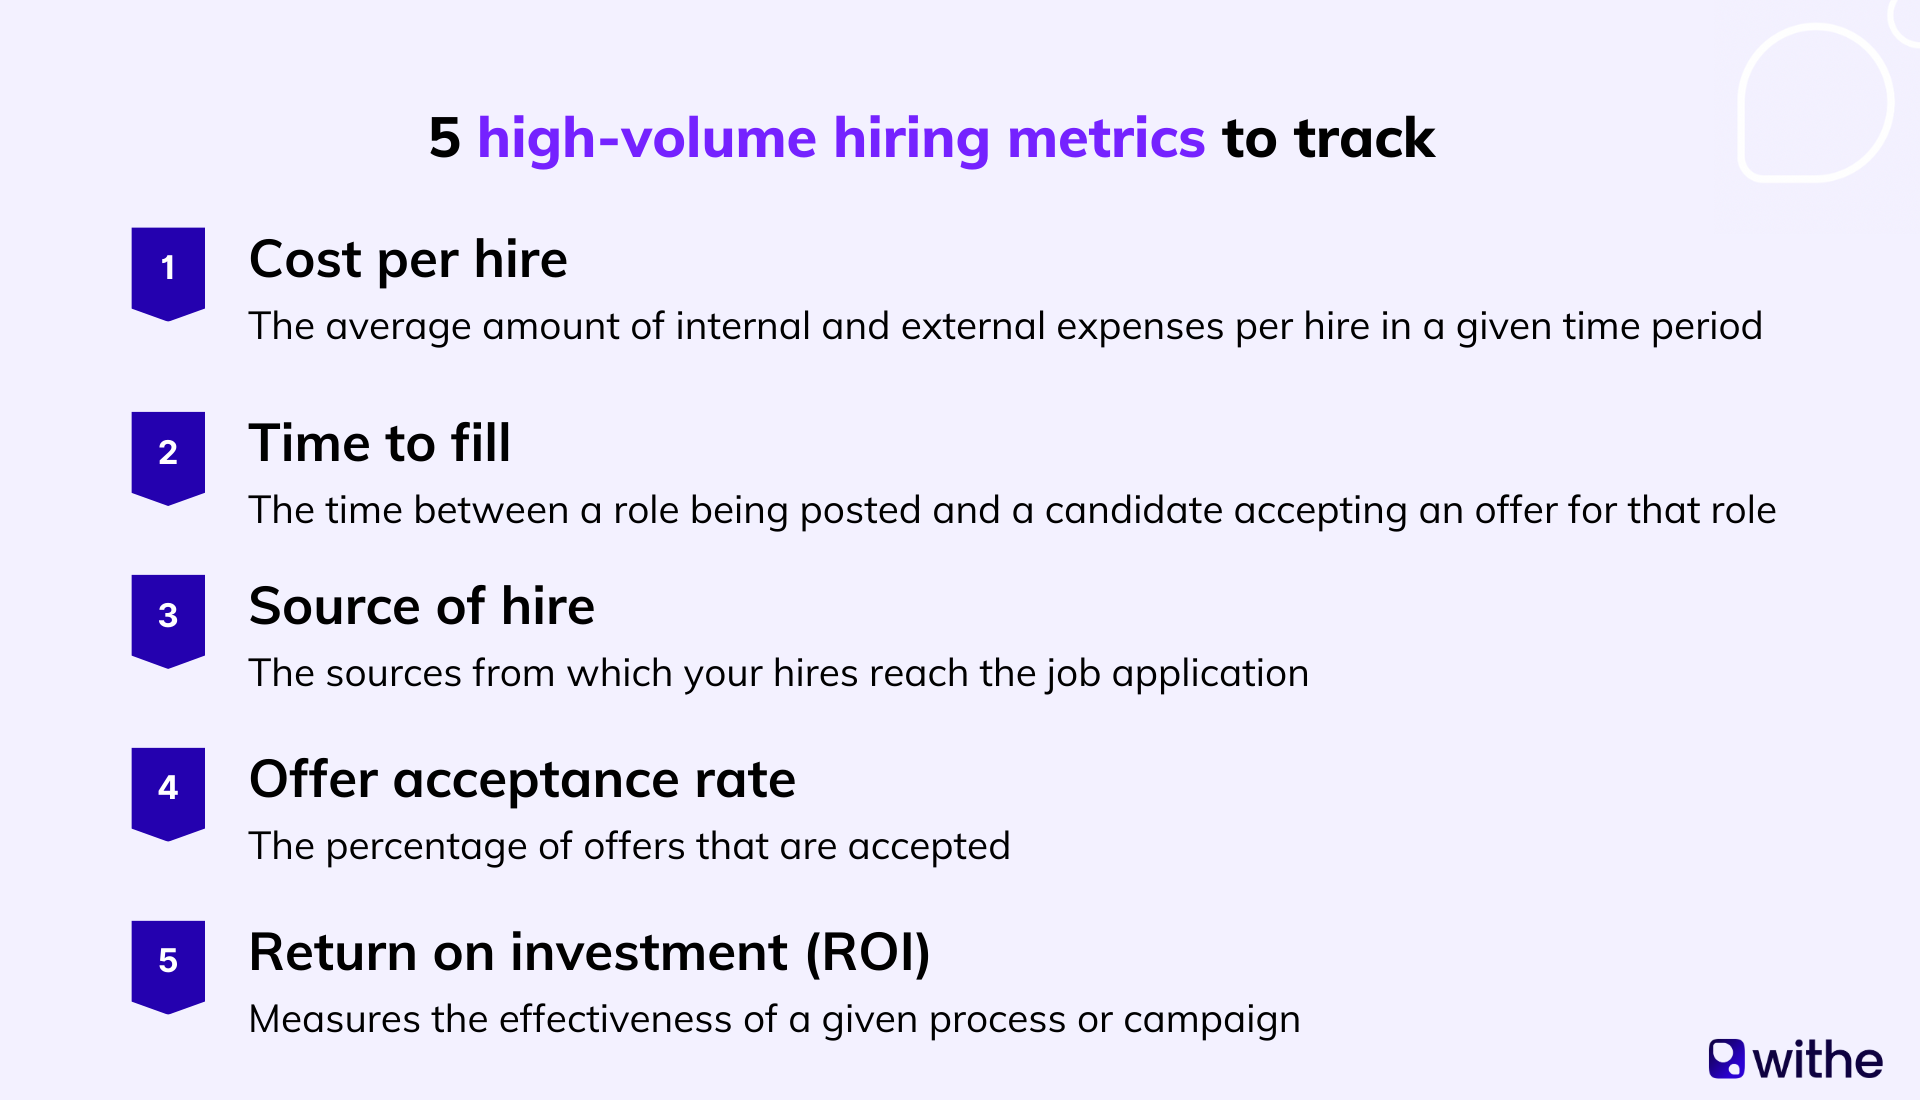 5 high-volume hiring metrics to track